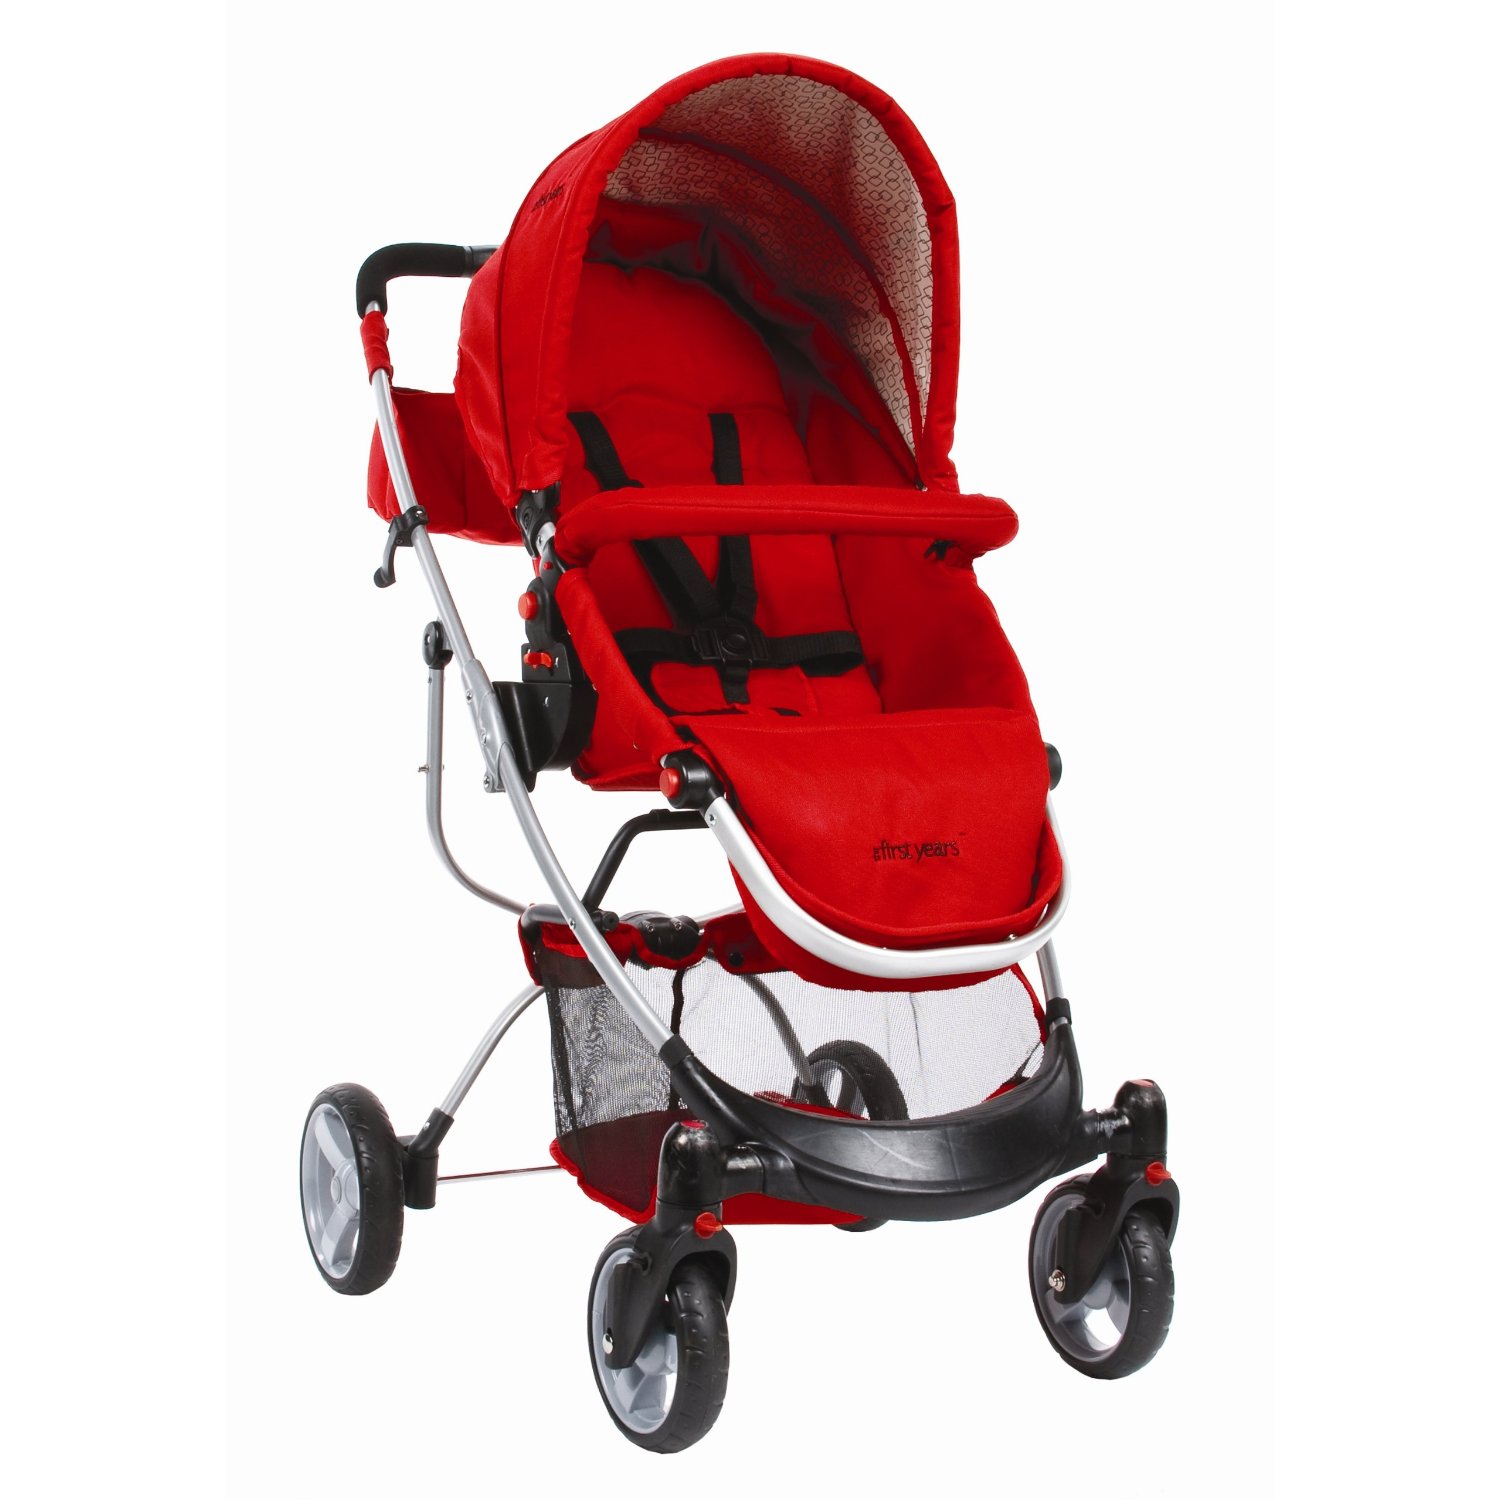 BuBu Baby Kids Store: The First Years Indigo Stroller - RETRO RED